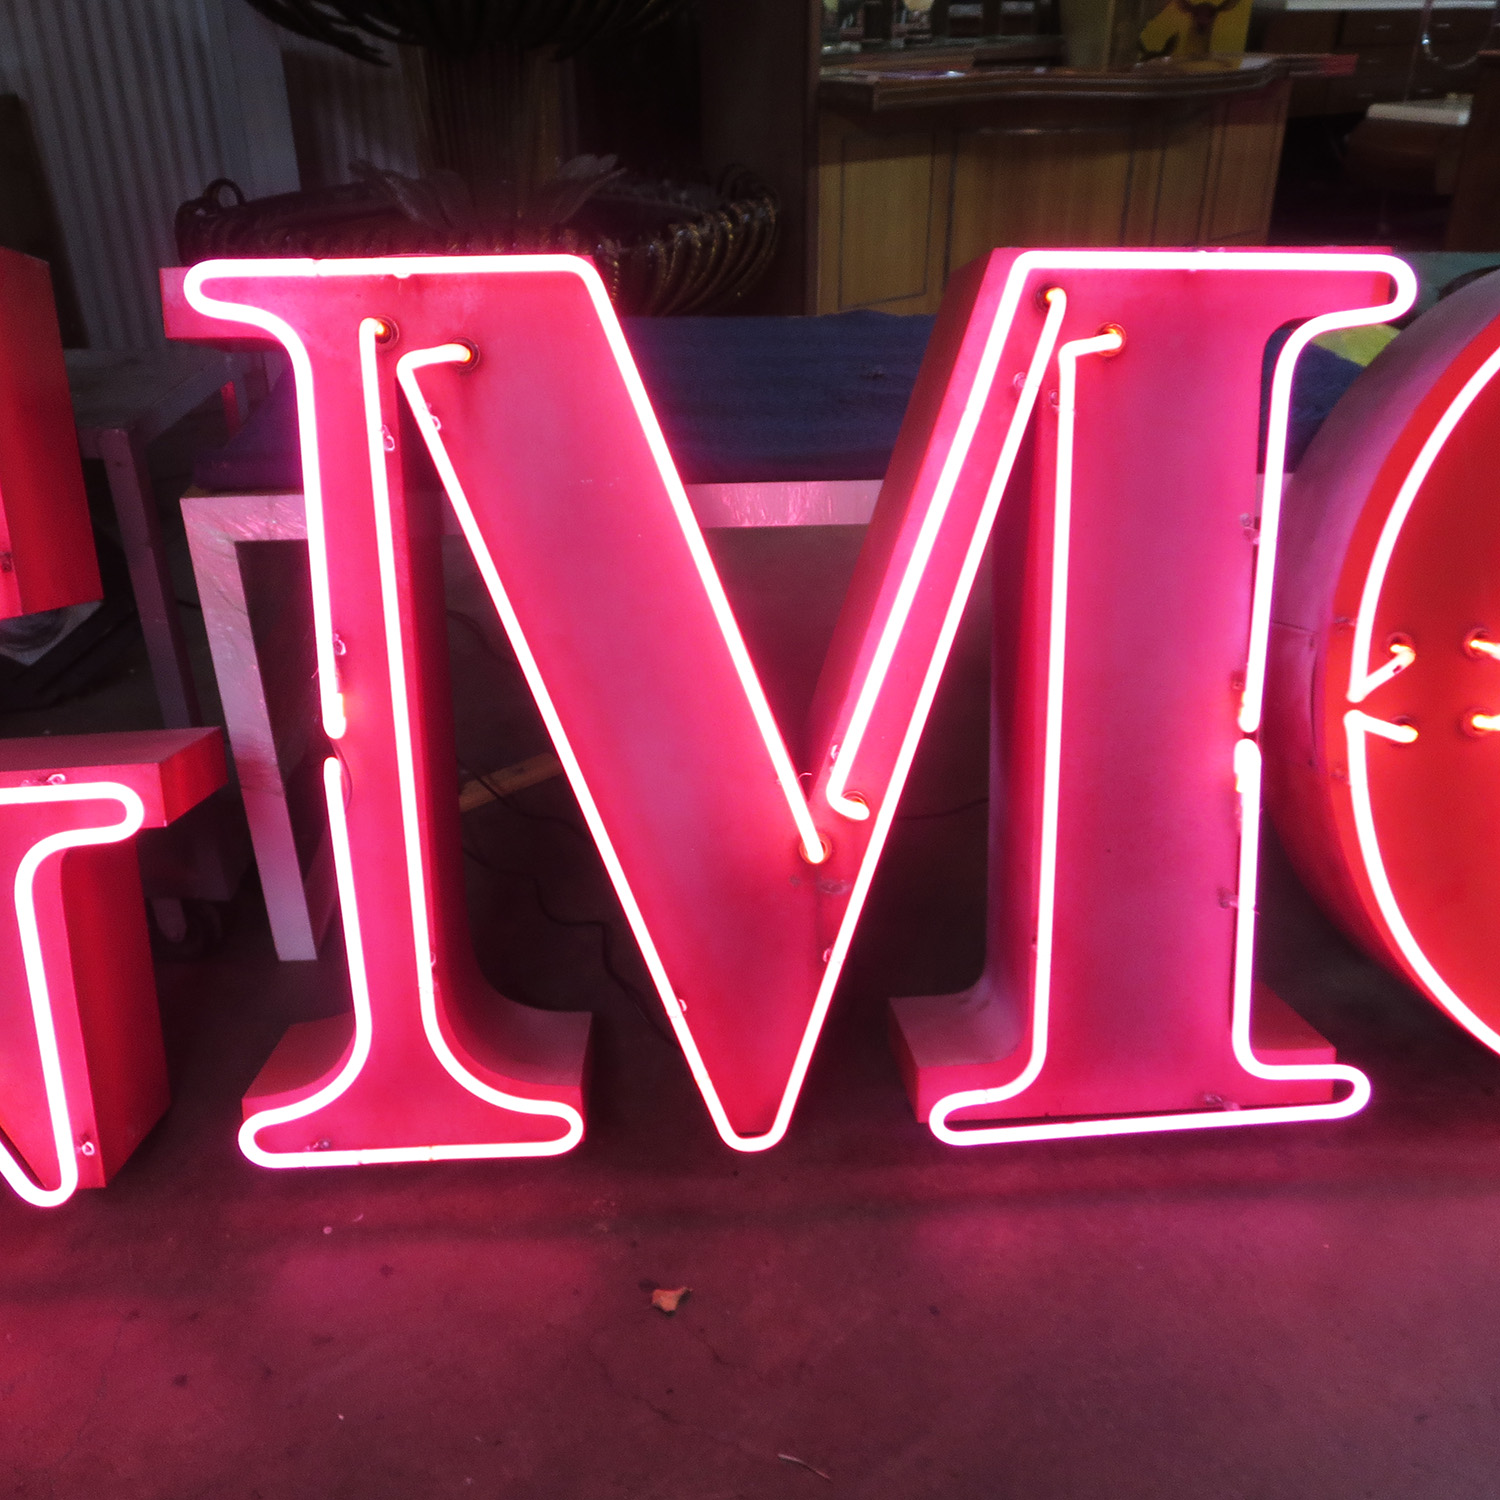 GMC Neon Sign